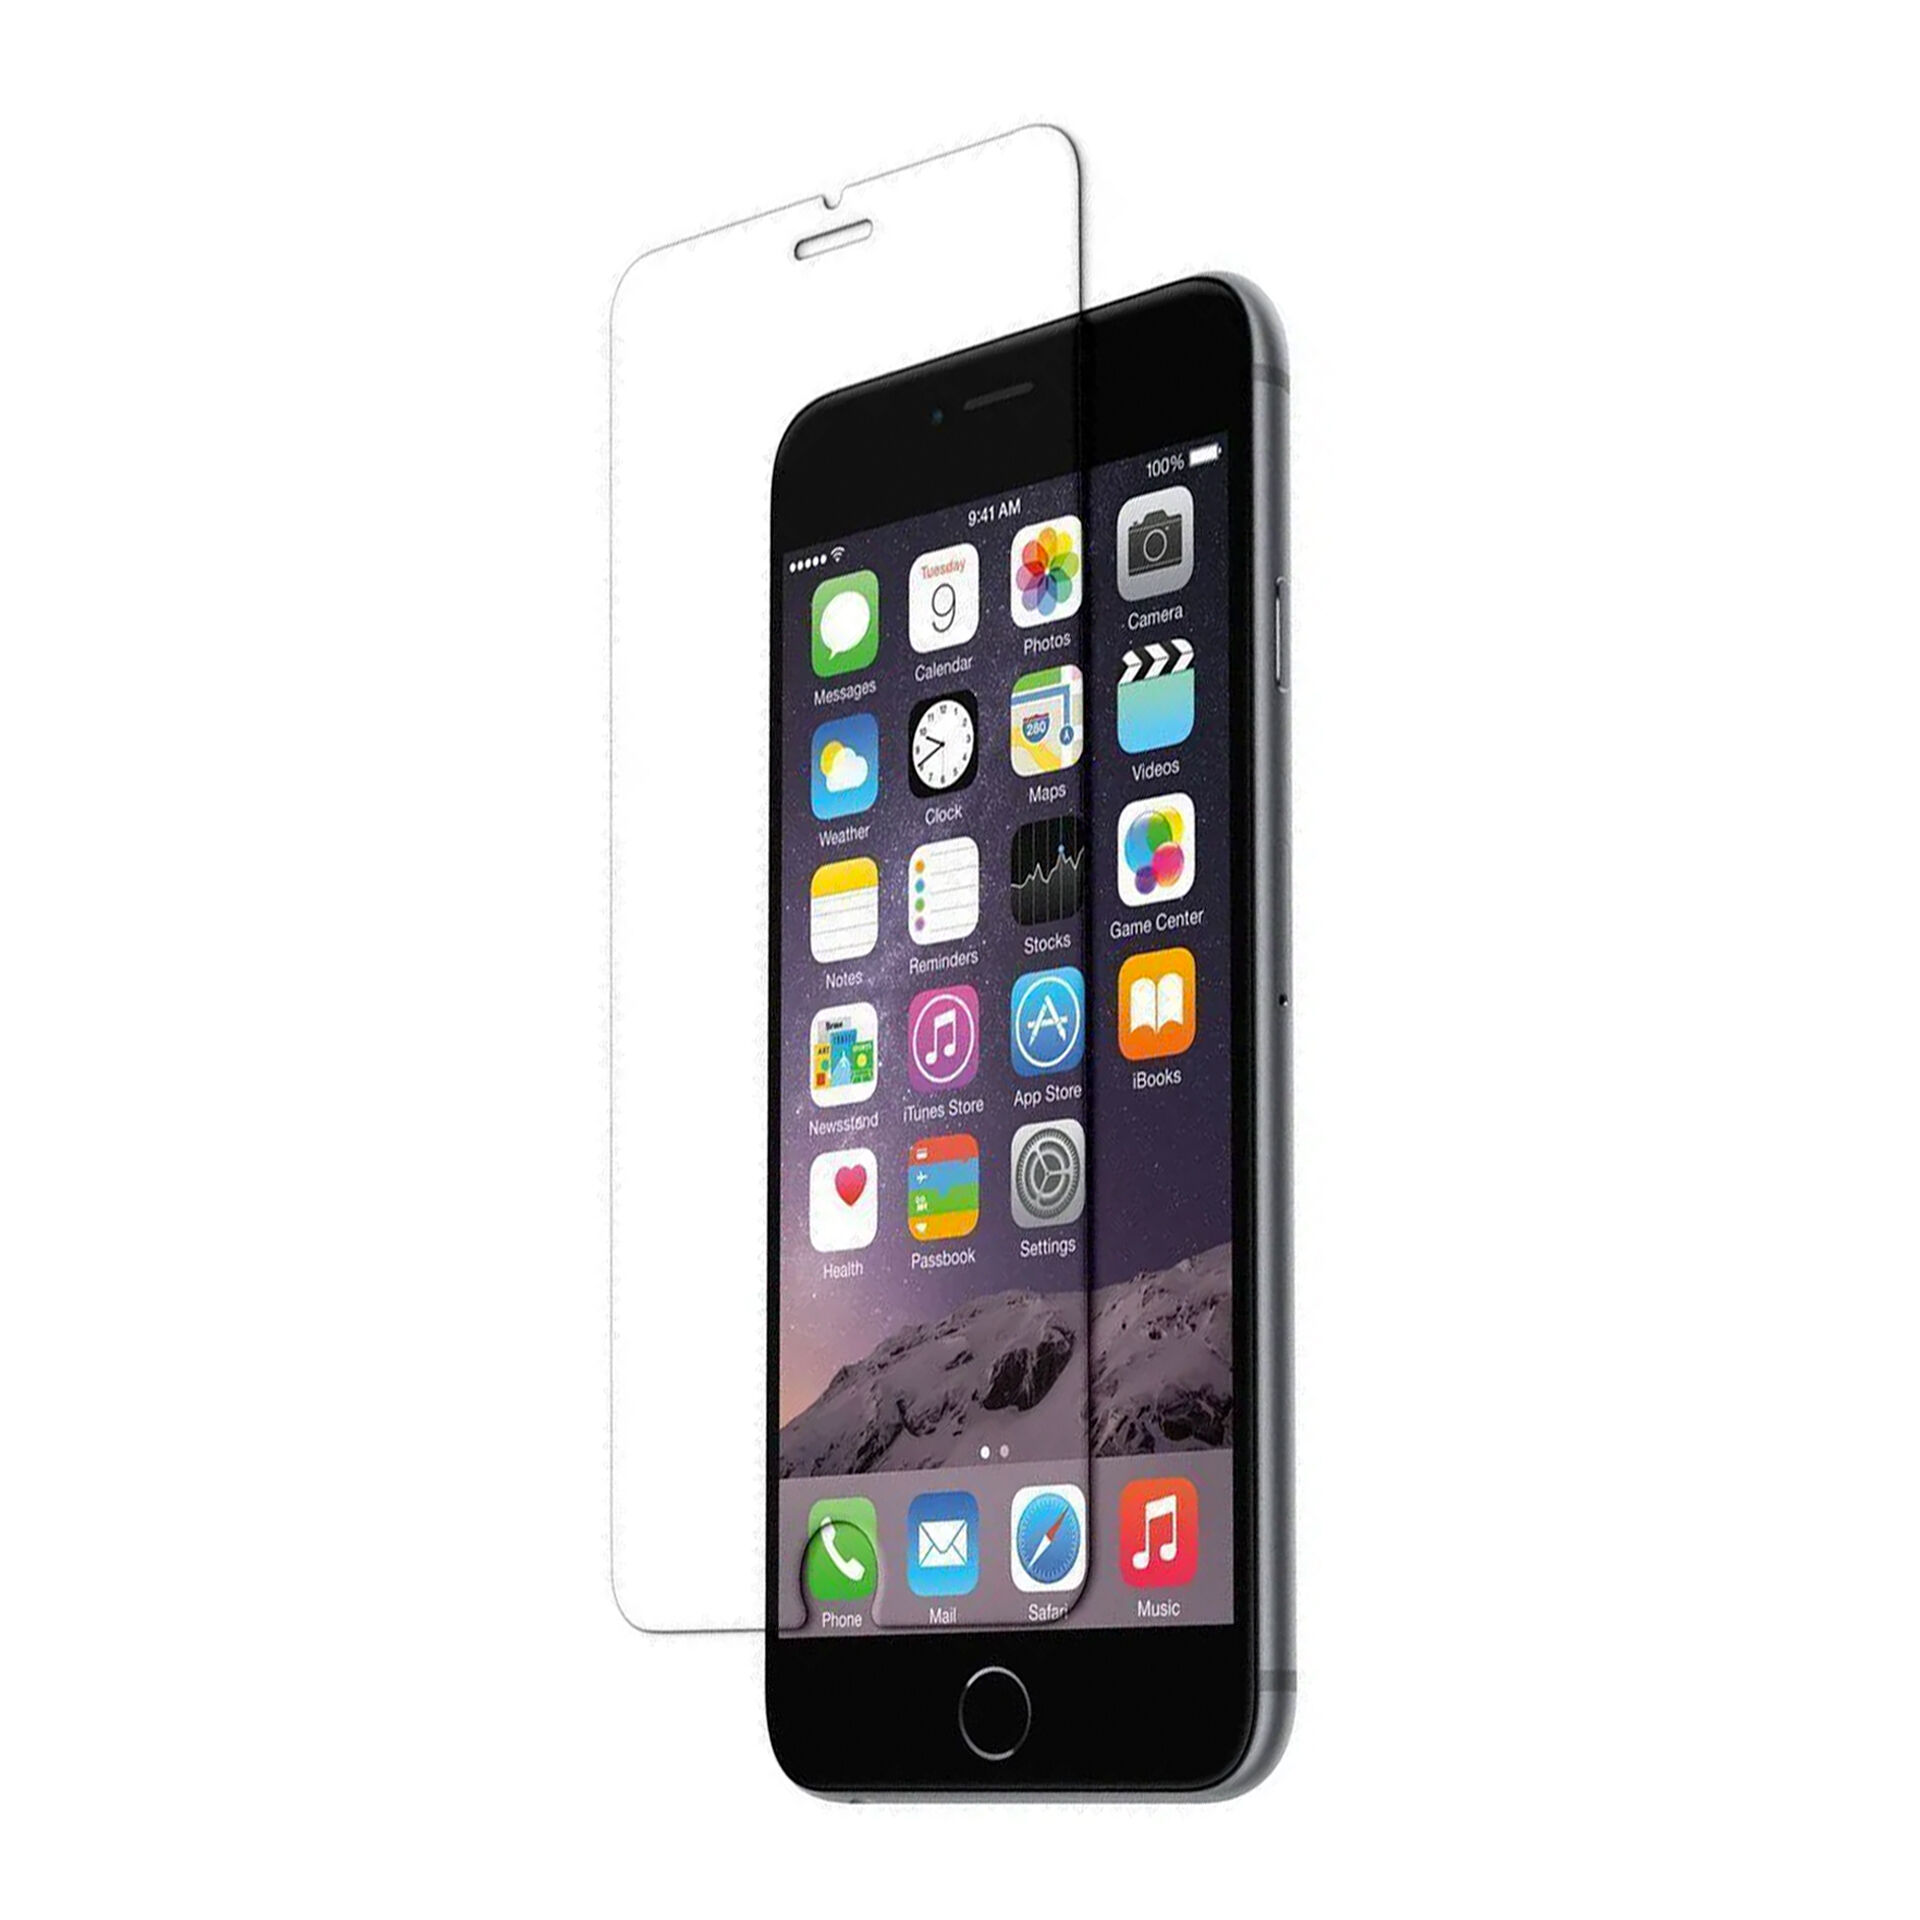 Open Box Mobile Pelicula simples Transparente iPhone 6s